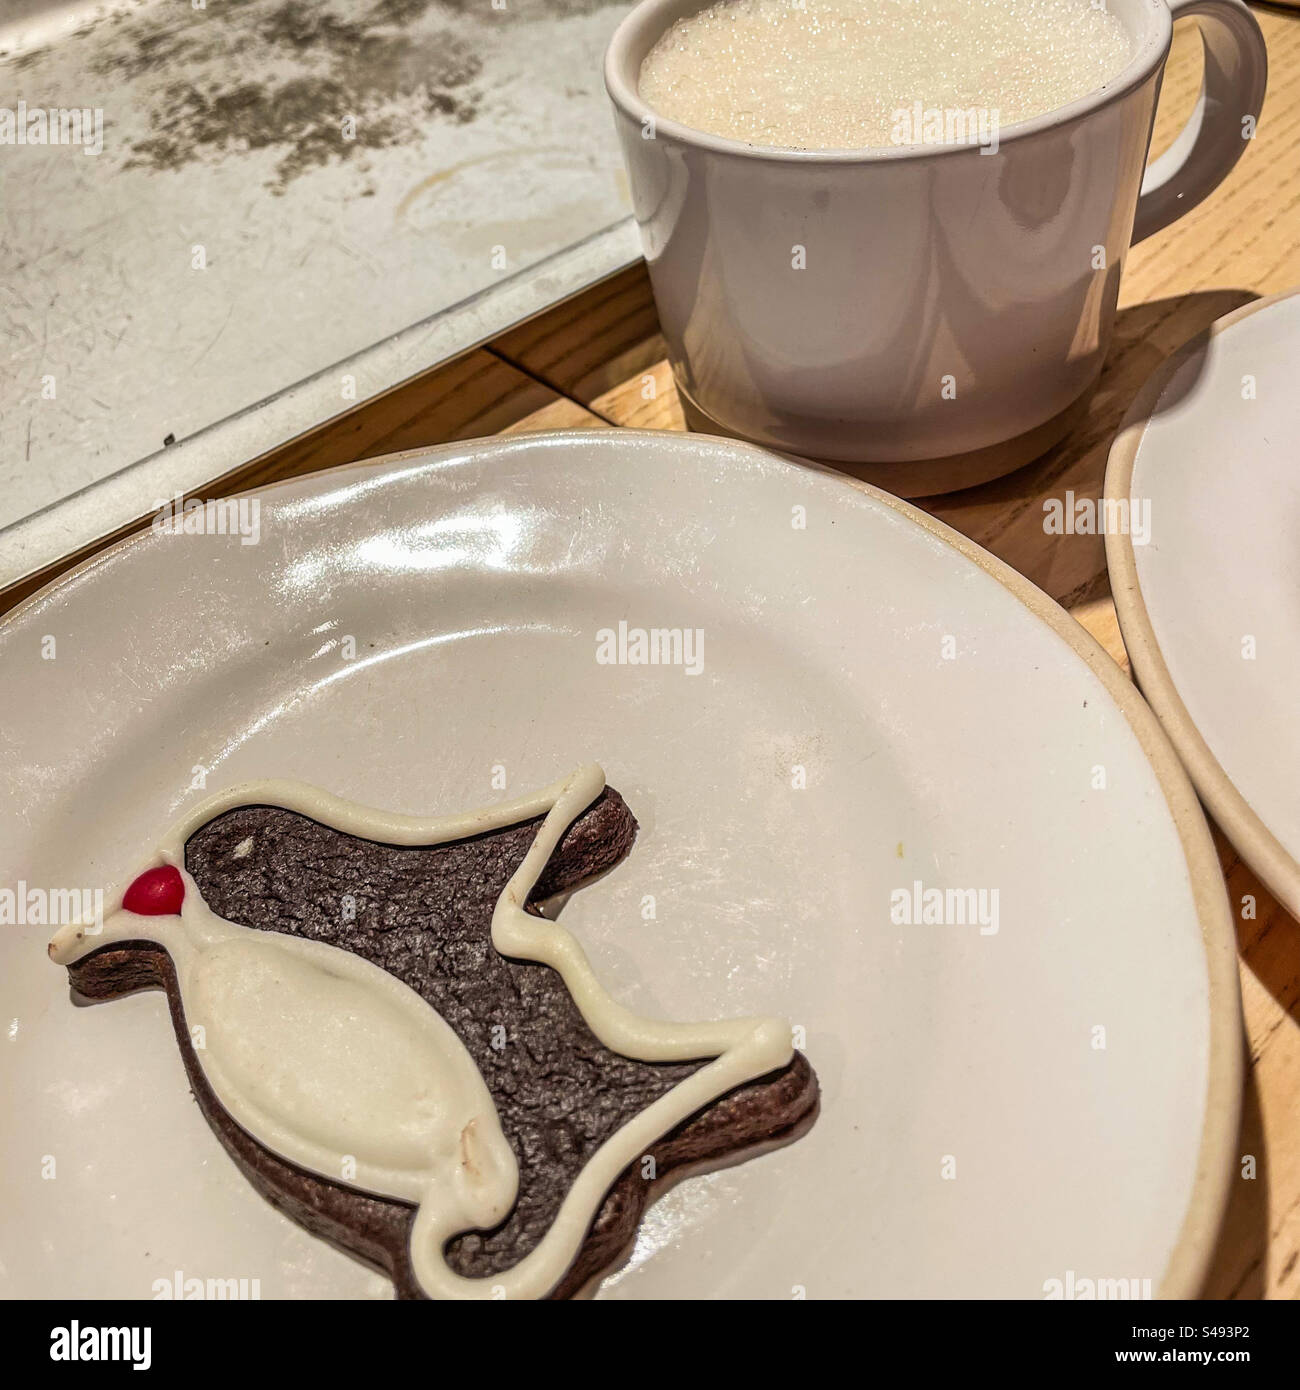 Cafe coffee Stock Photo